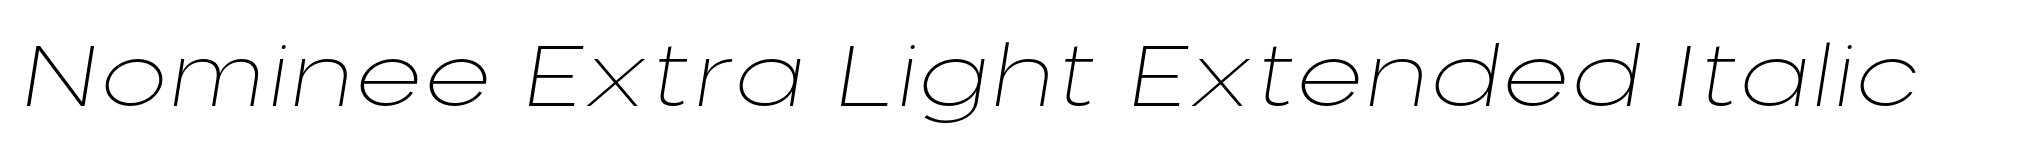 Nominee Extra Light Extended Italic image